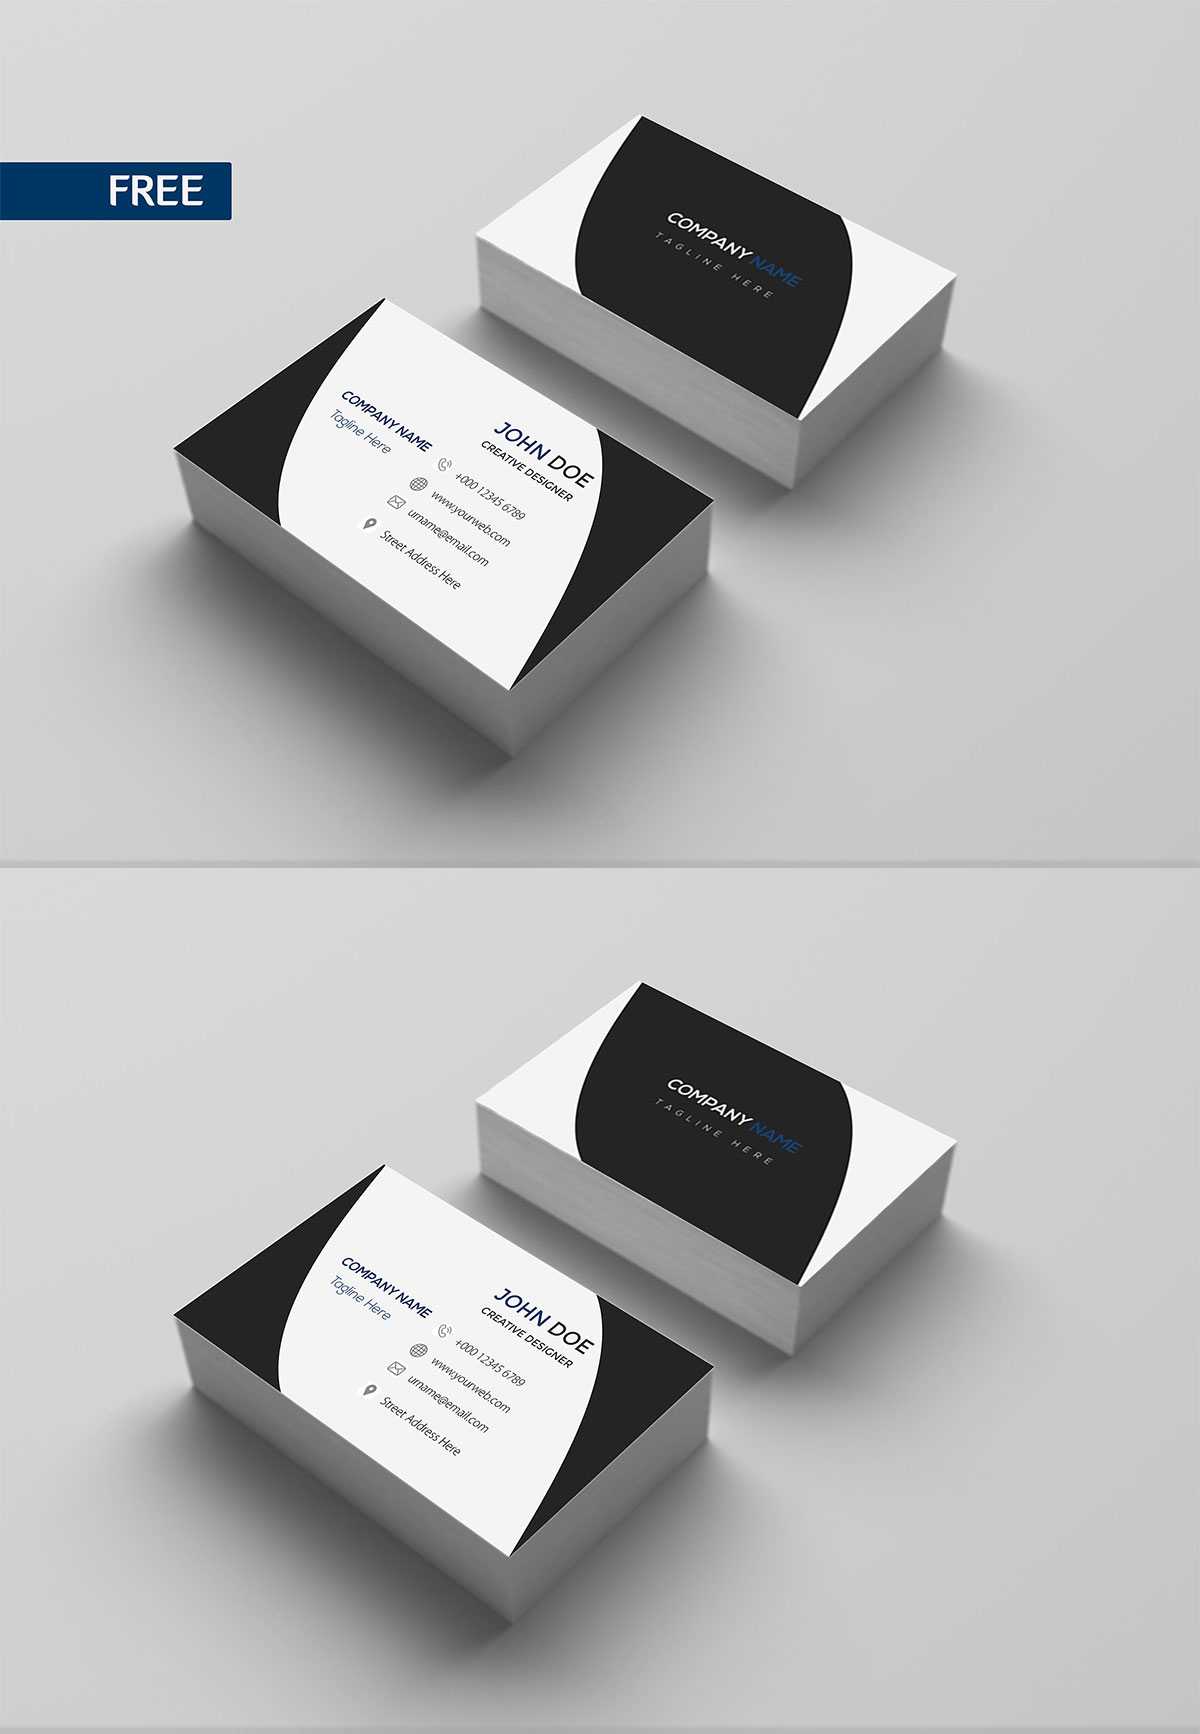 Free Print Design Business Card Template – Creativetacos Within Business Card Template Photoshop Cs6